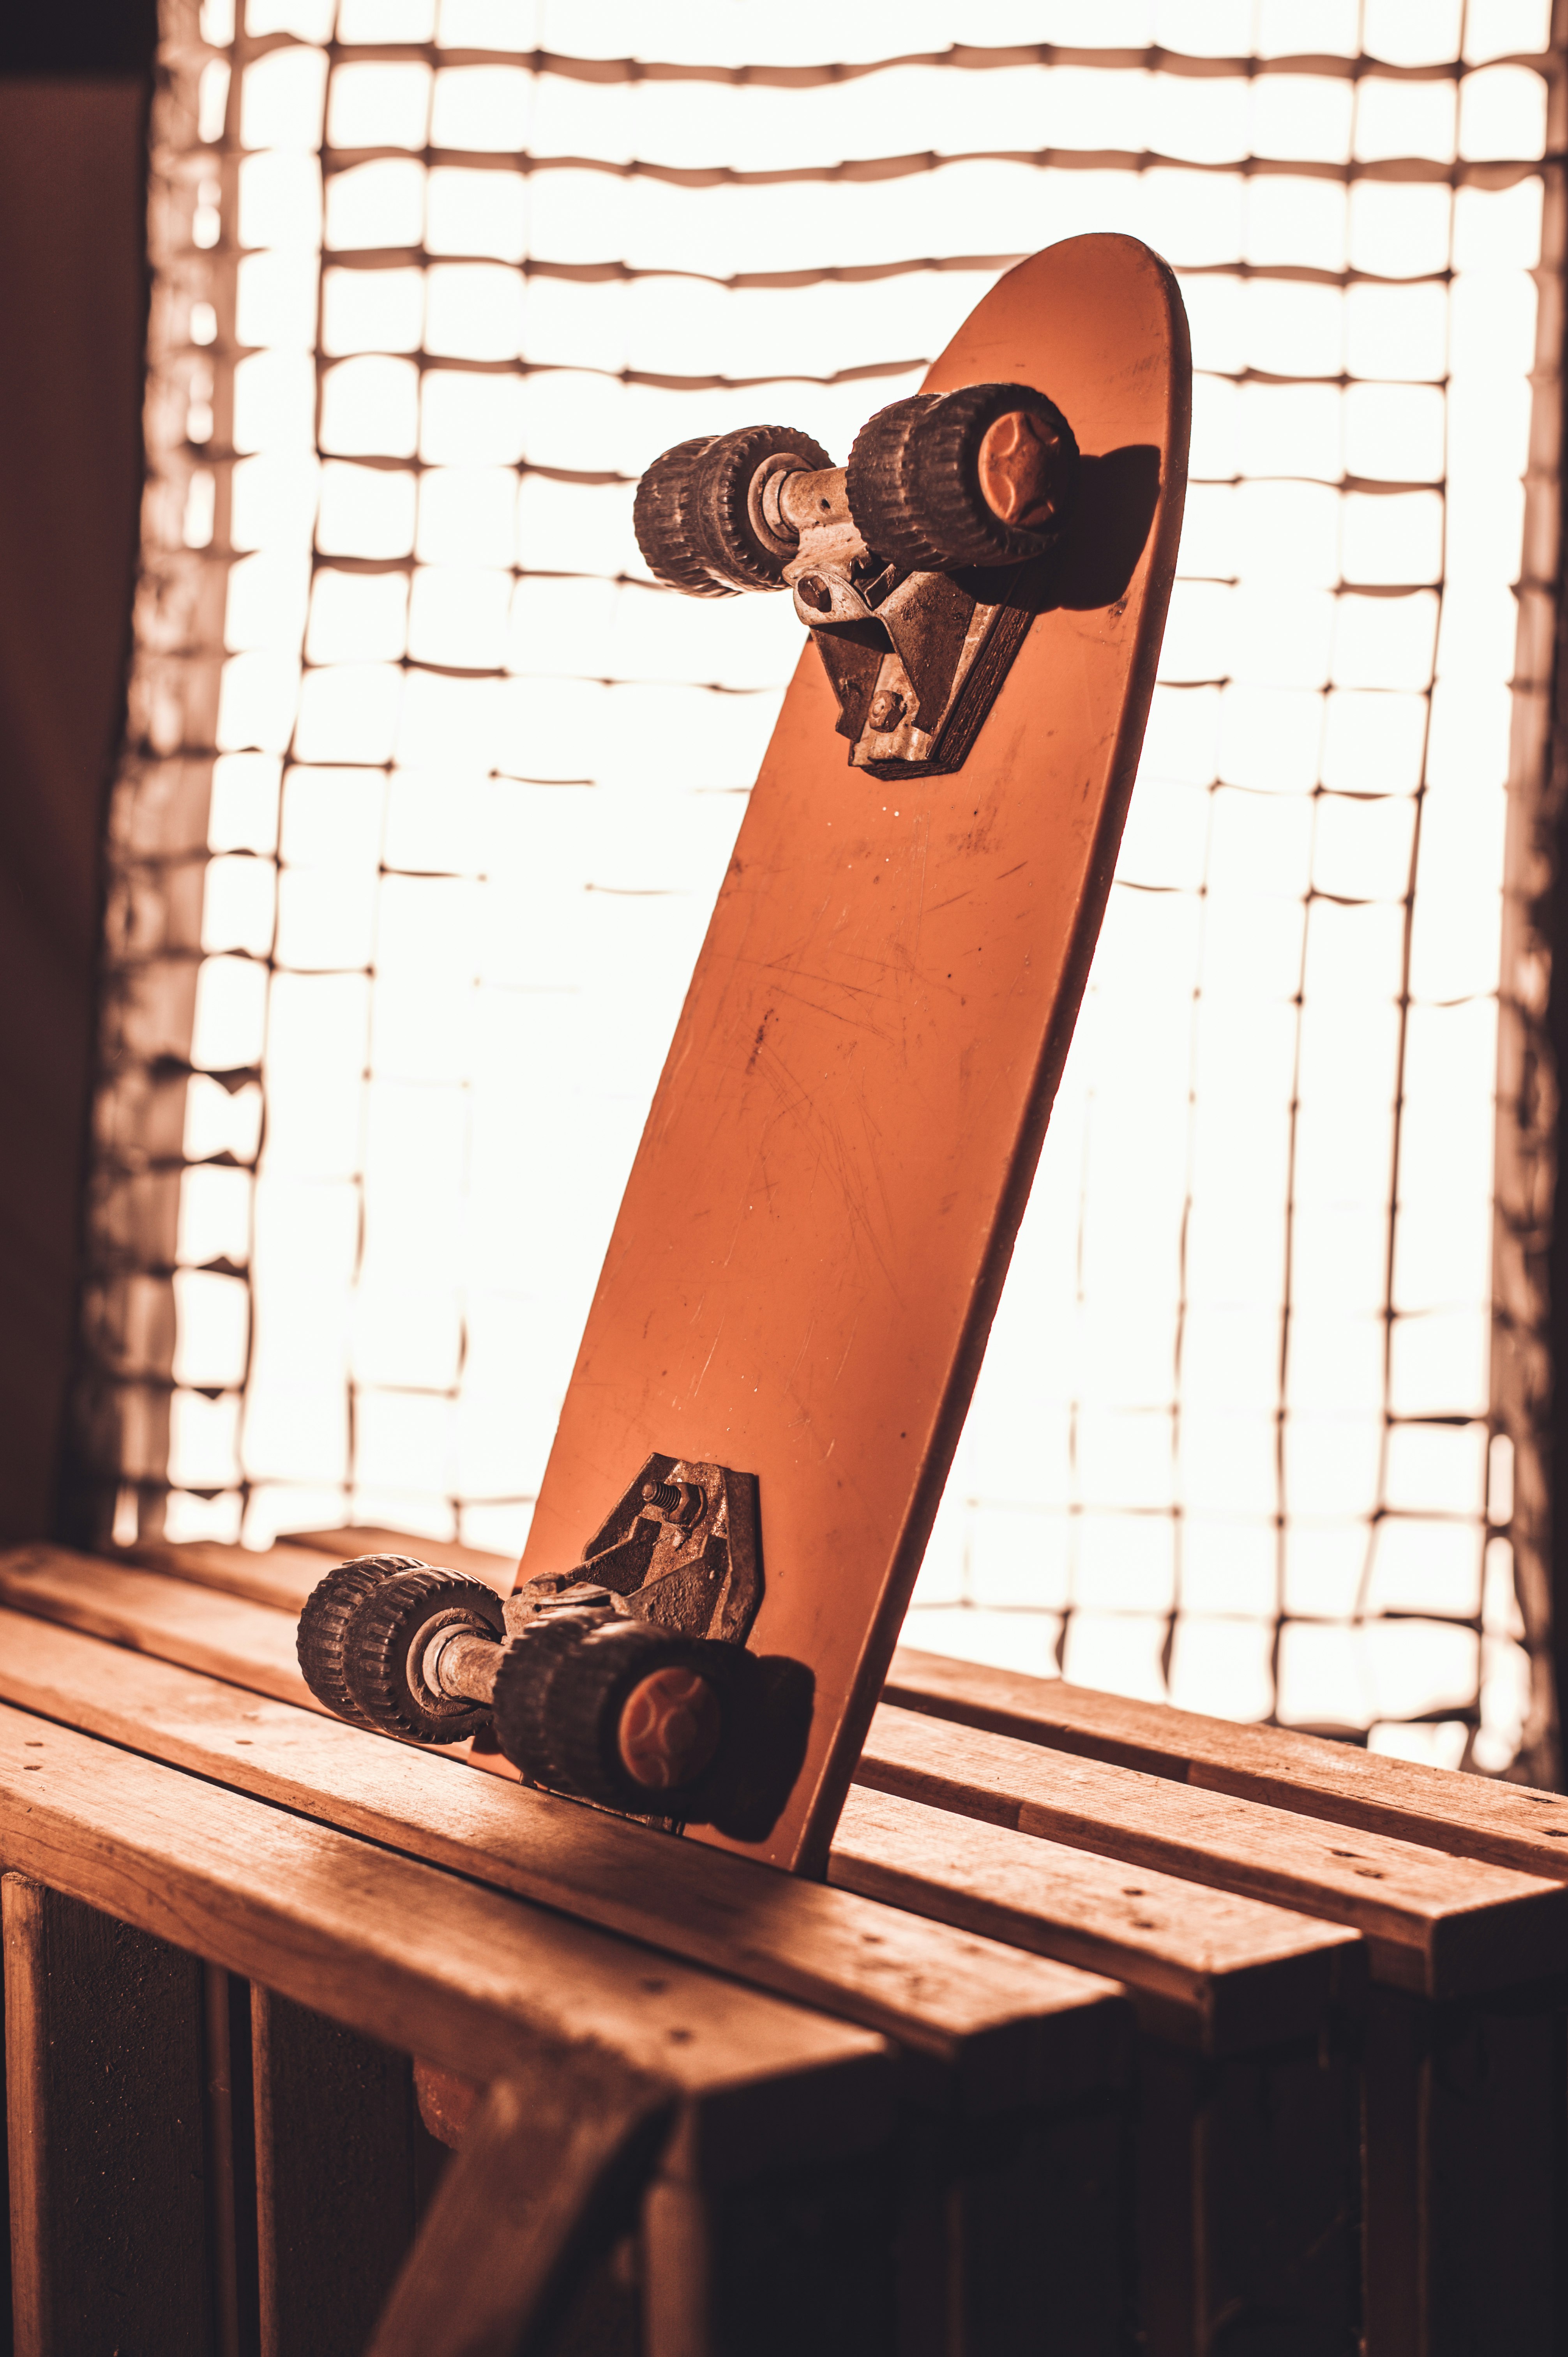 Historical homemade skateboard from the comunism era